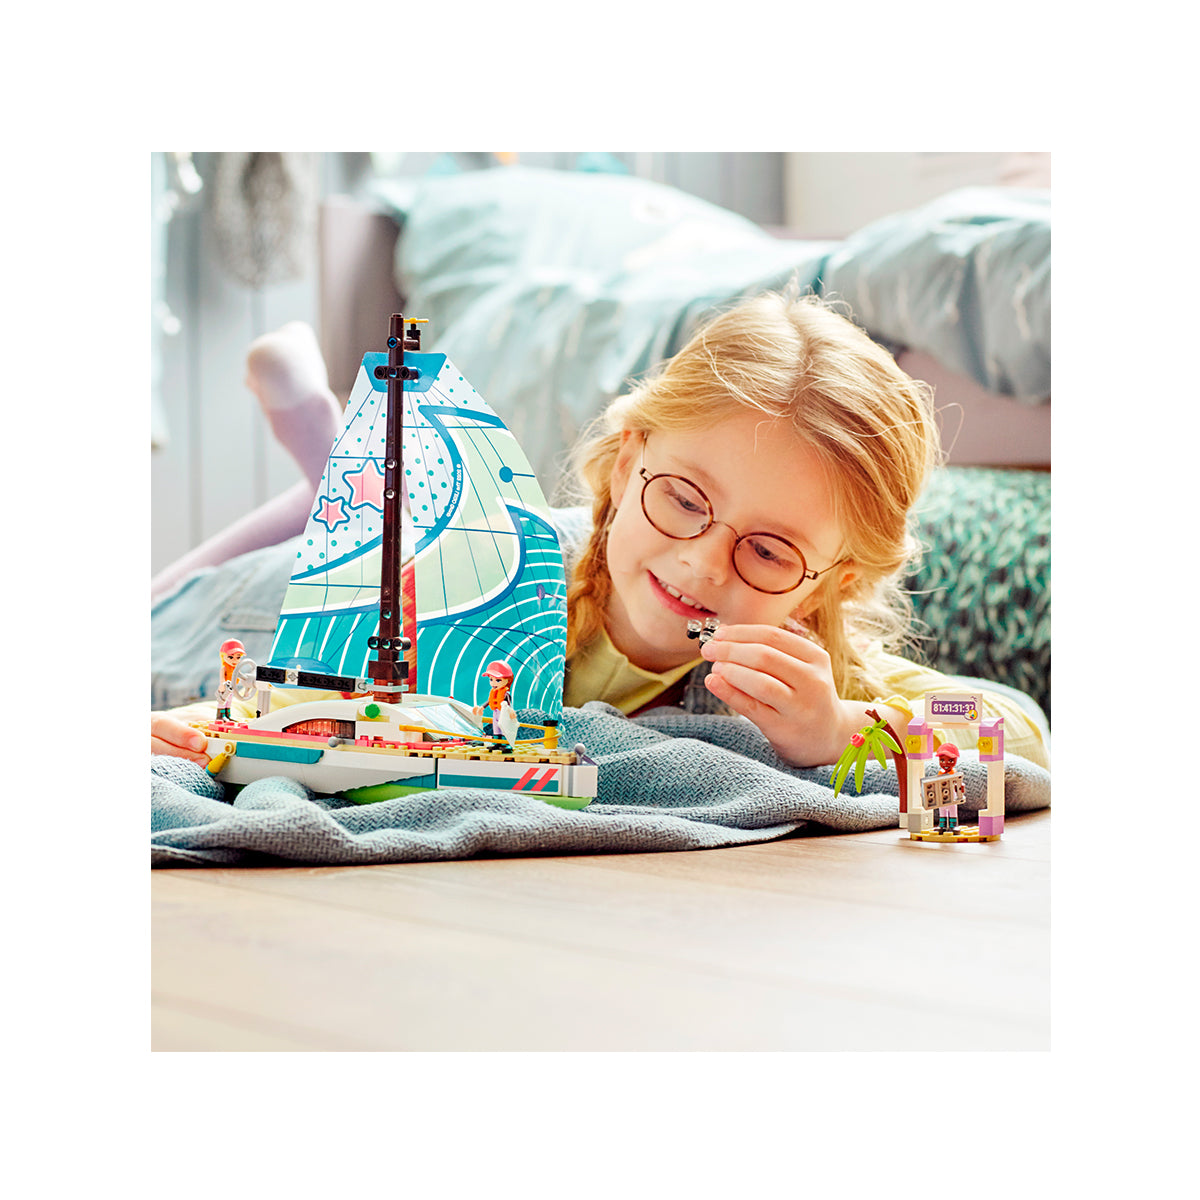 LEGO Friends - Stephanie's Sailing Adventure 41716